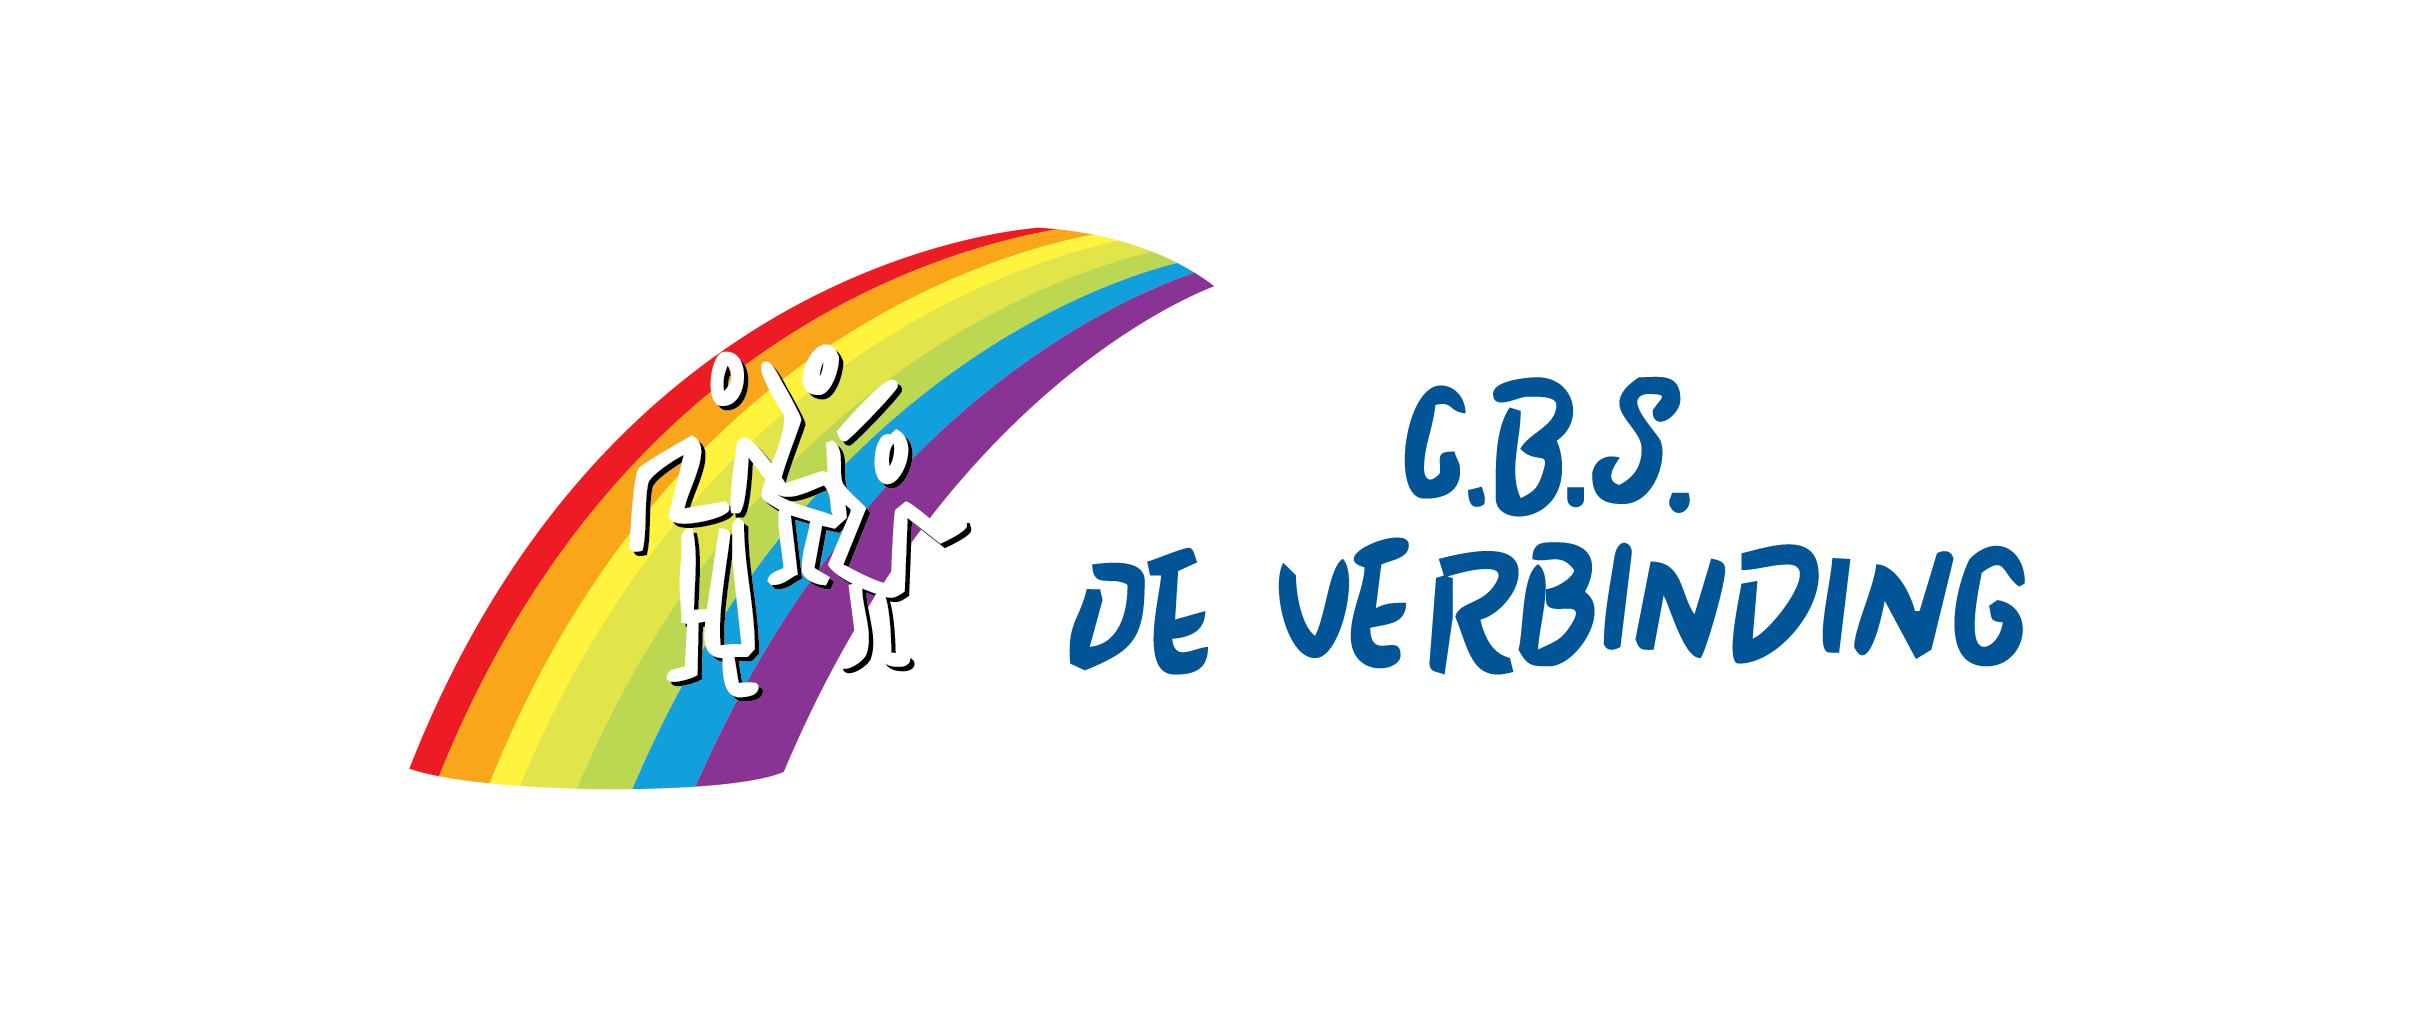 CBS de Verbindingsweg logo